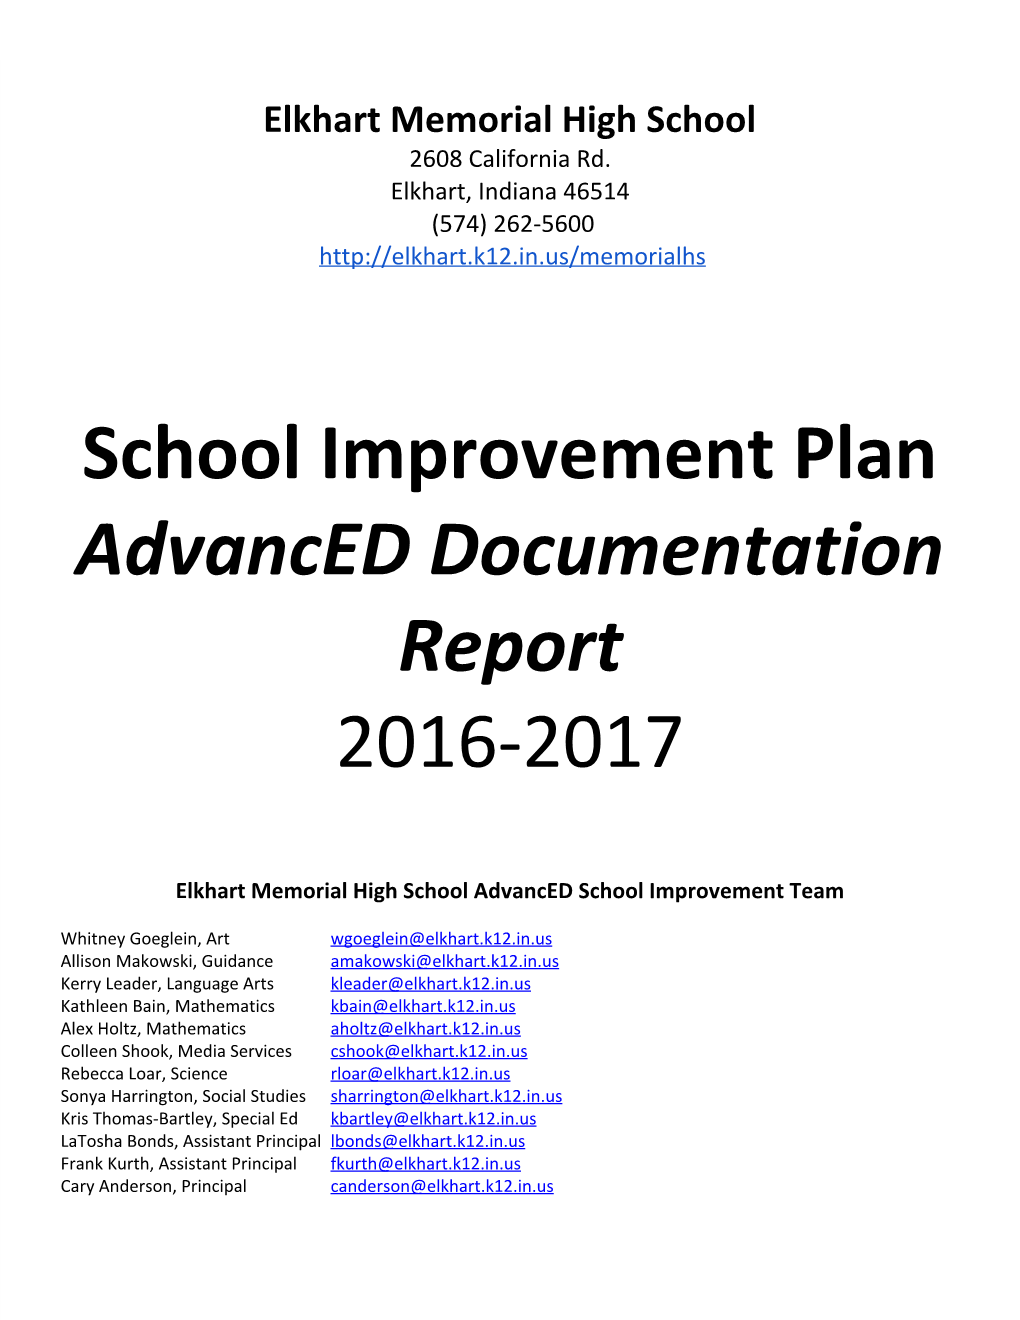 School Improvement Plan Advanced Documentation Report 2016-2017